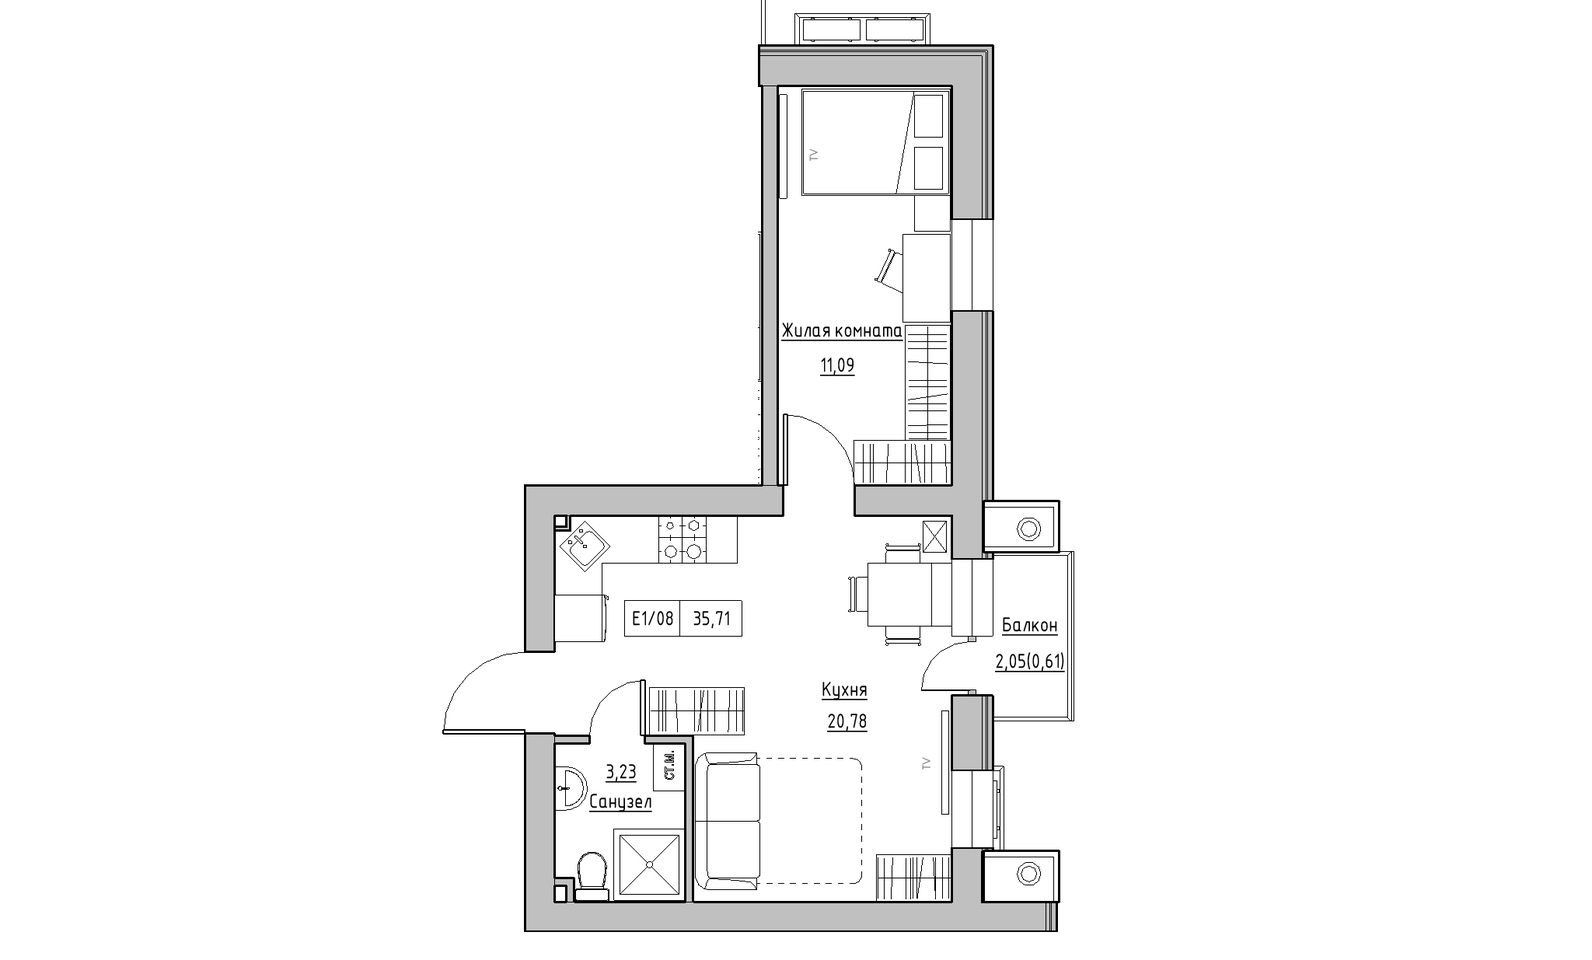 Planning 1-rm flats area 35.71m2, KS-014-02/0009.